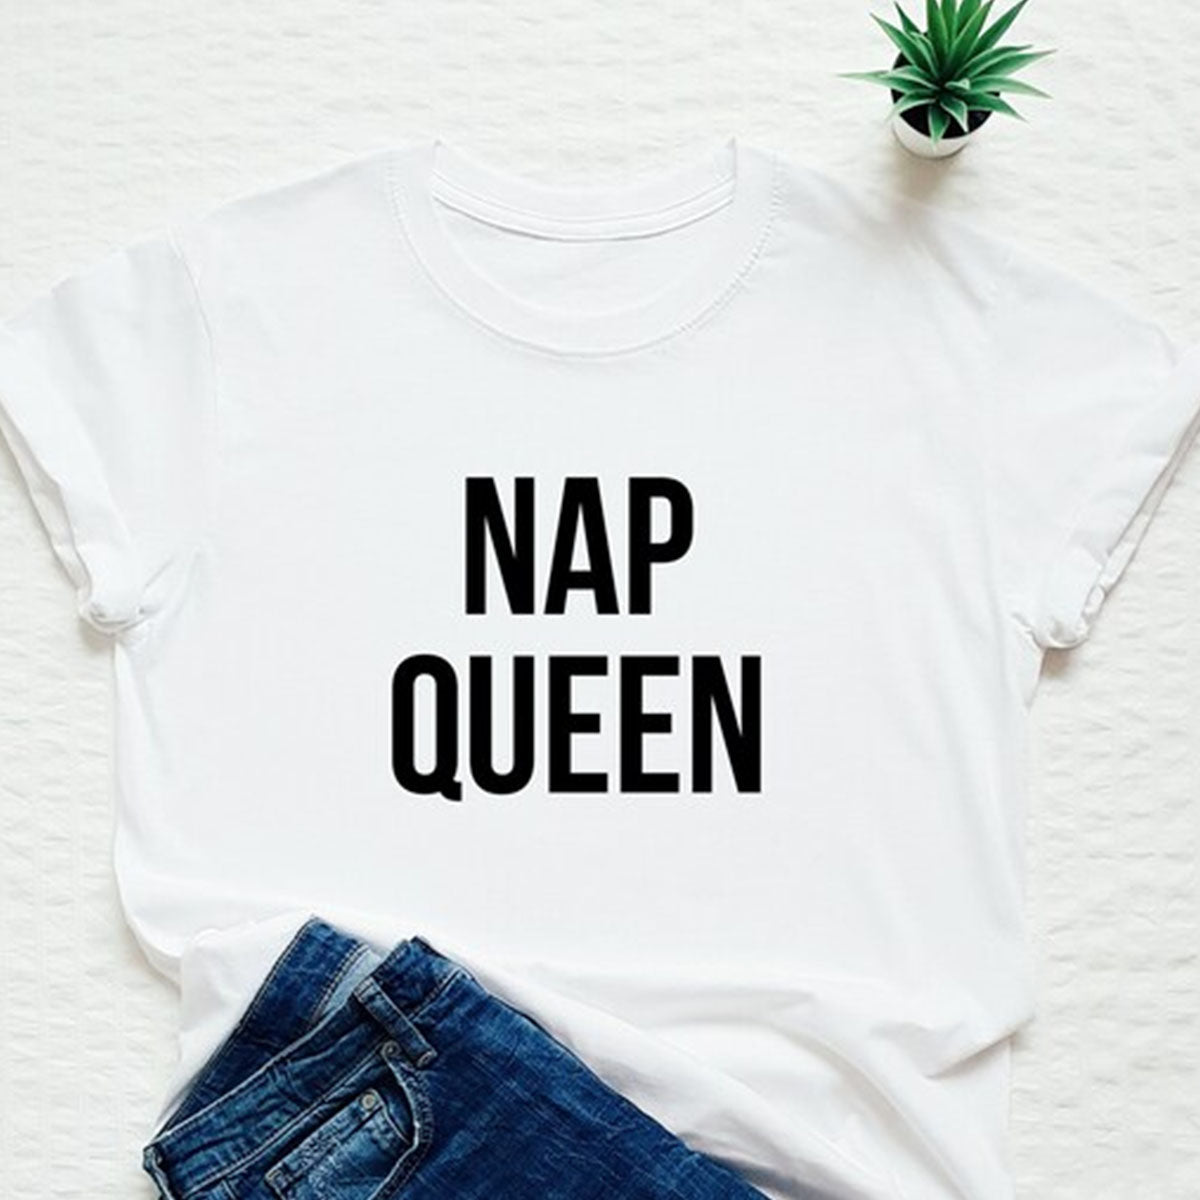 Nap Queen Printed Unisex T-Shirt